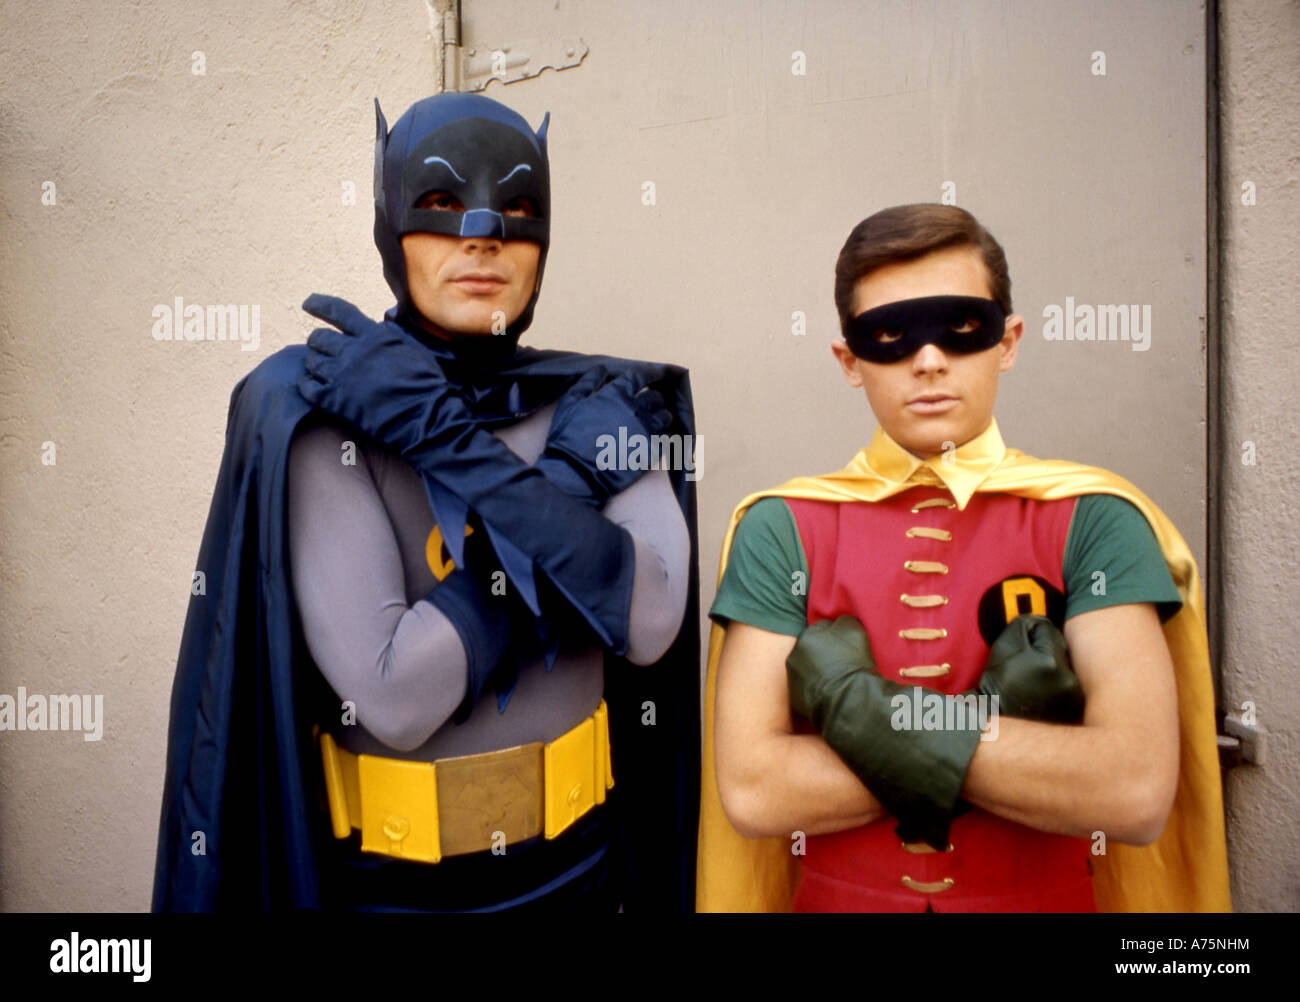 Bruce wayne batman hi-res stock photography and images - Alamy